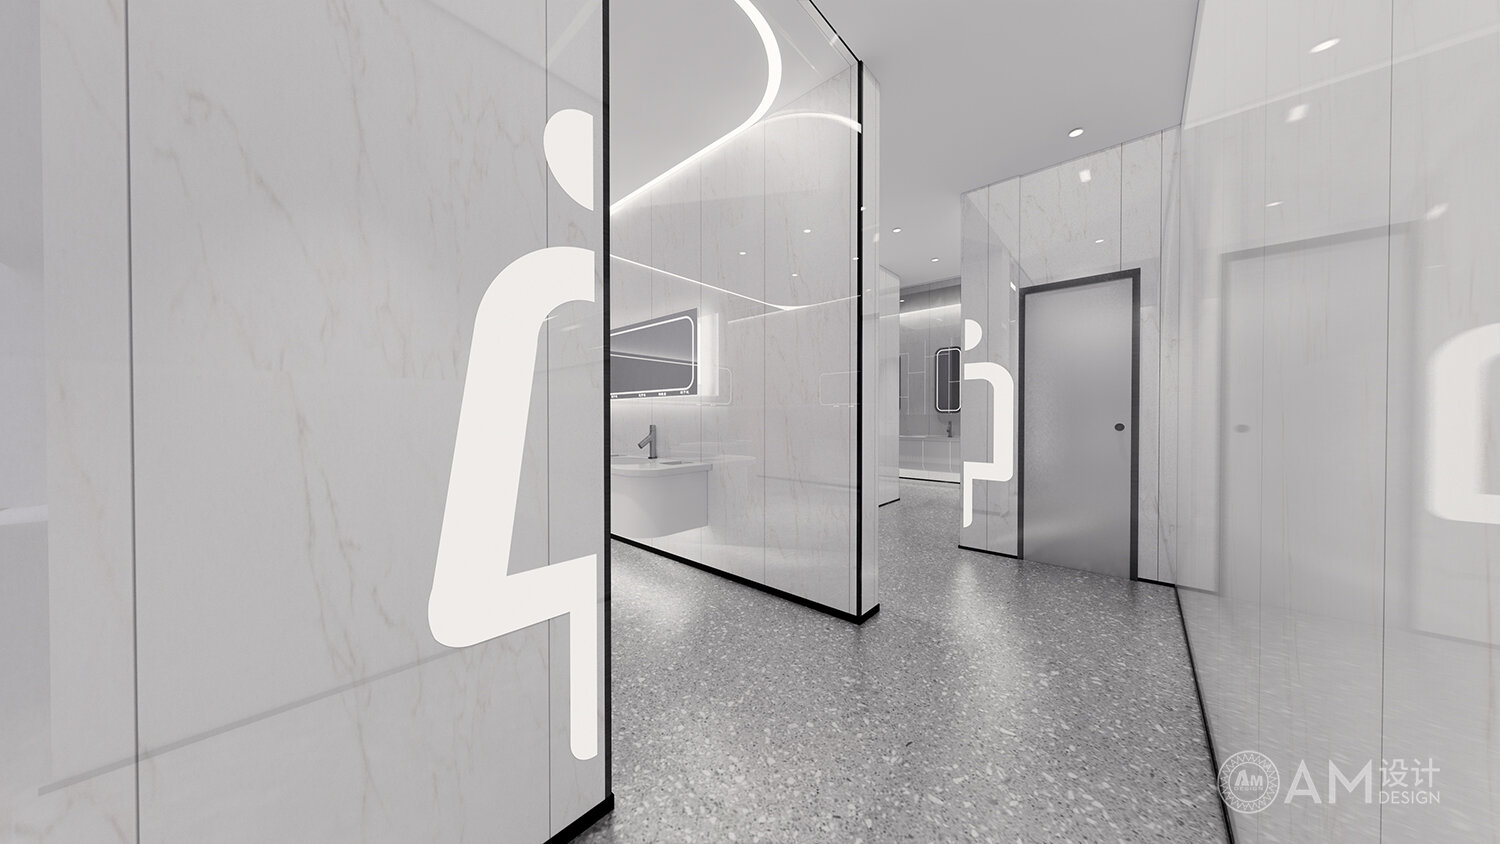 AM DESIGN | Toilet design of Beijing jhg Jinhui port commercial complex